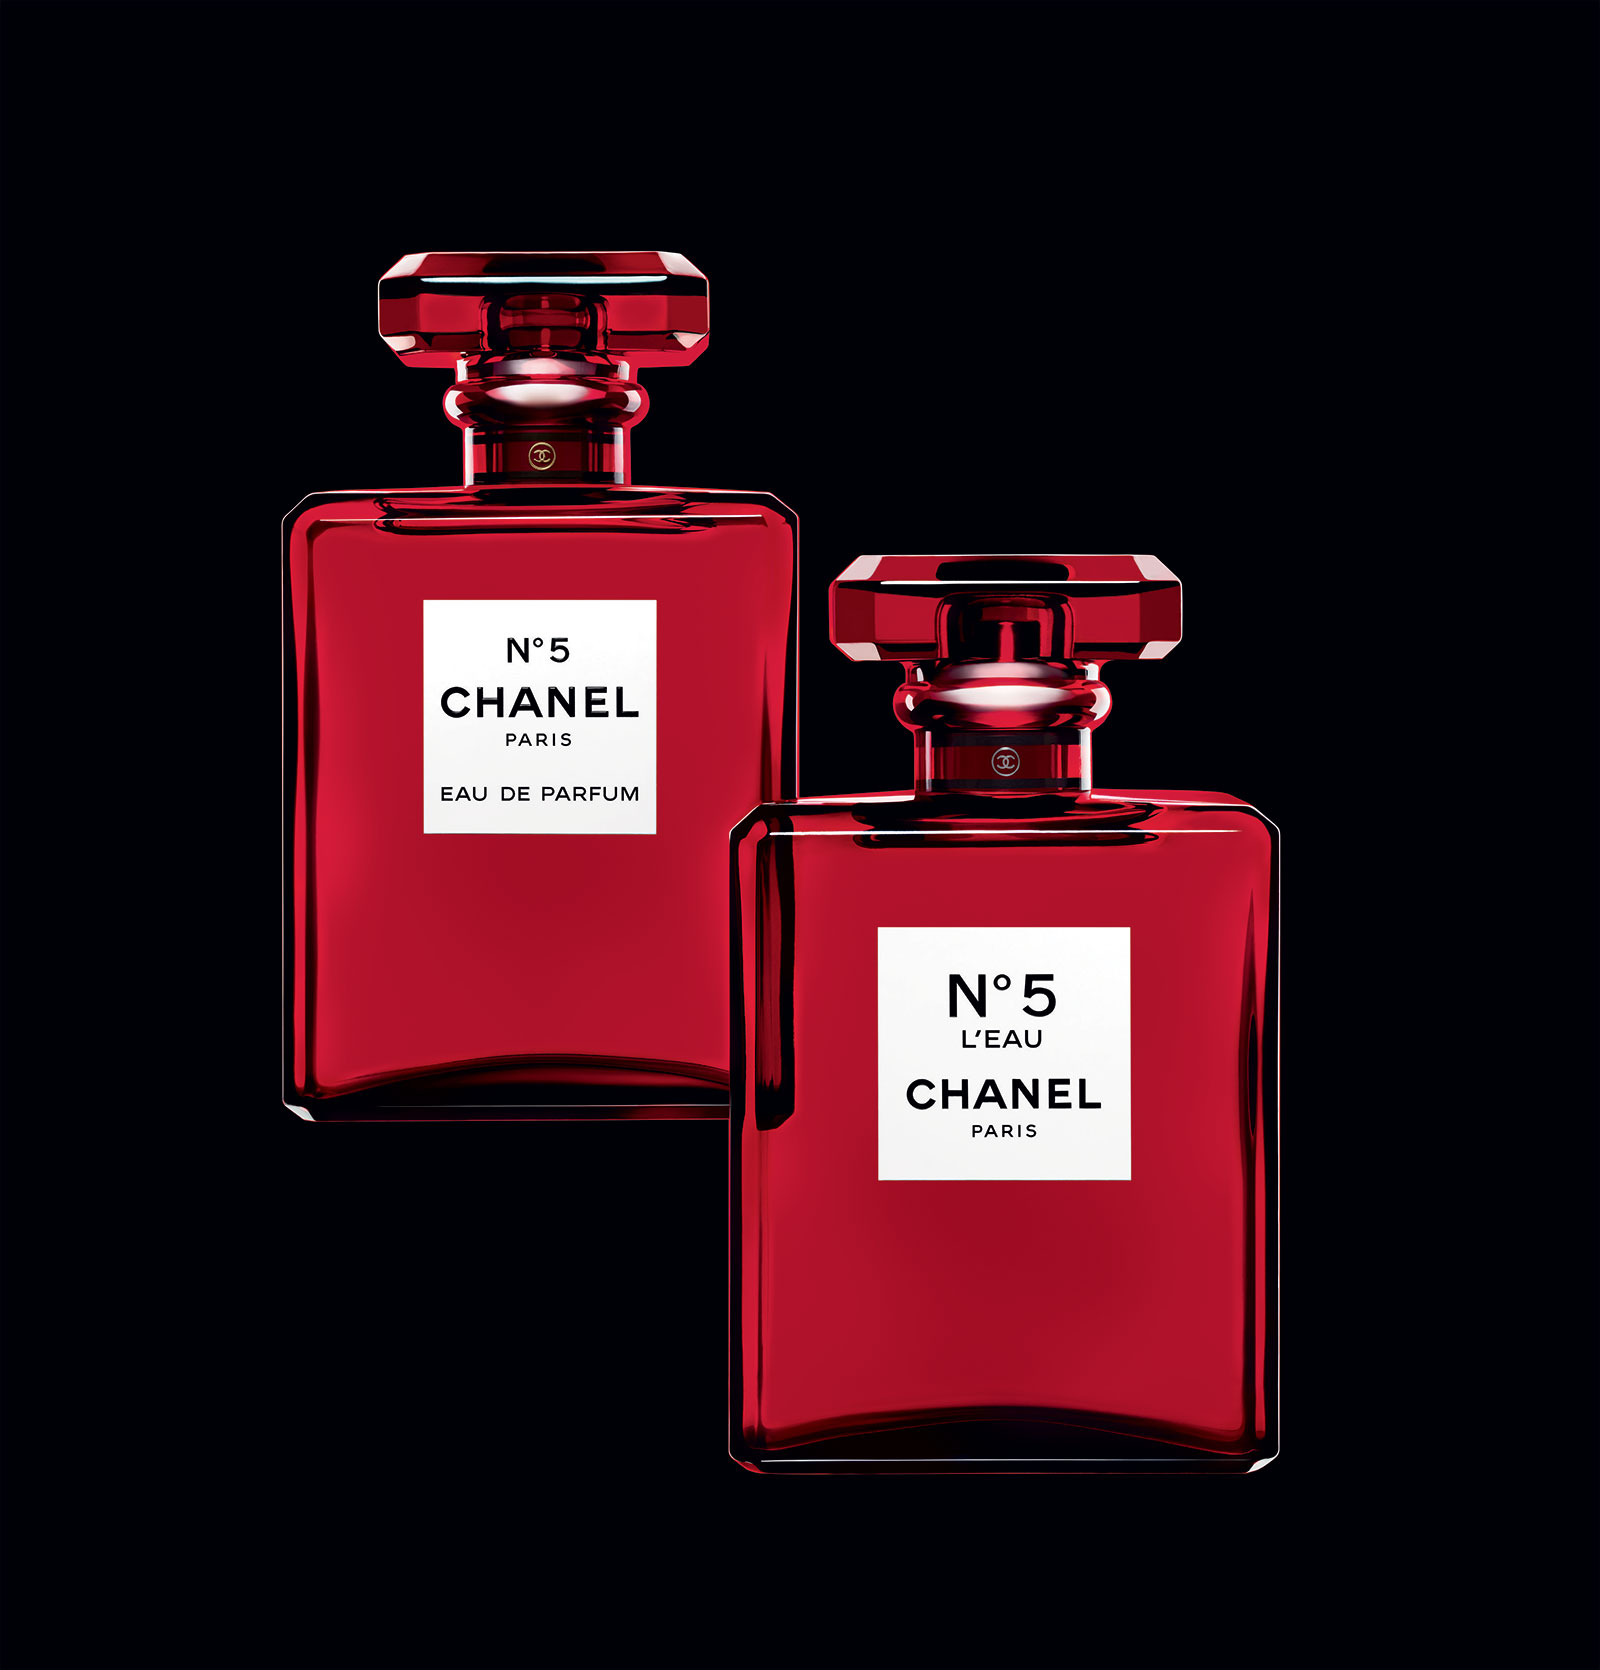 Chanel No 5 Eau de Parfum Red Edition Chanel perfume - a new fragrance